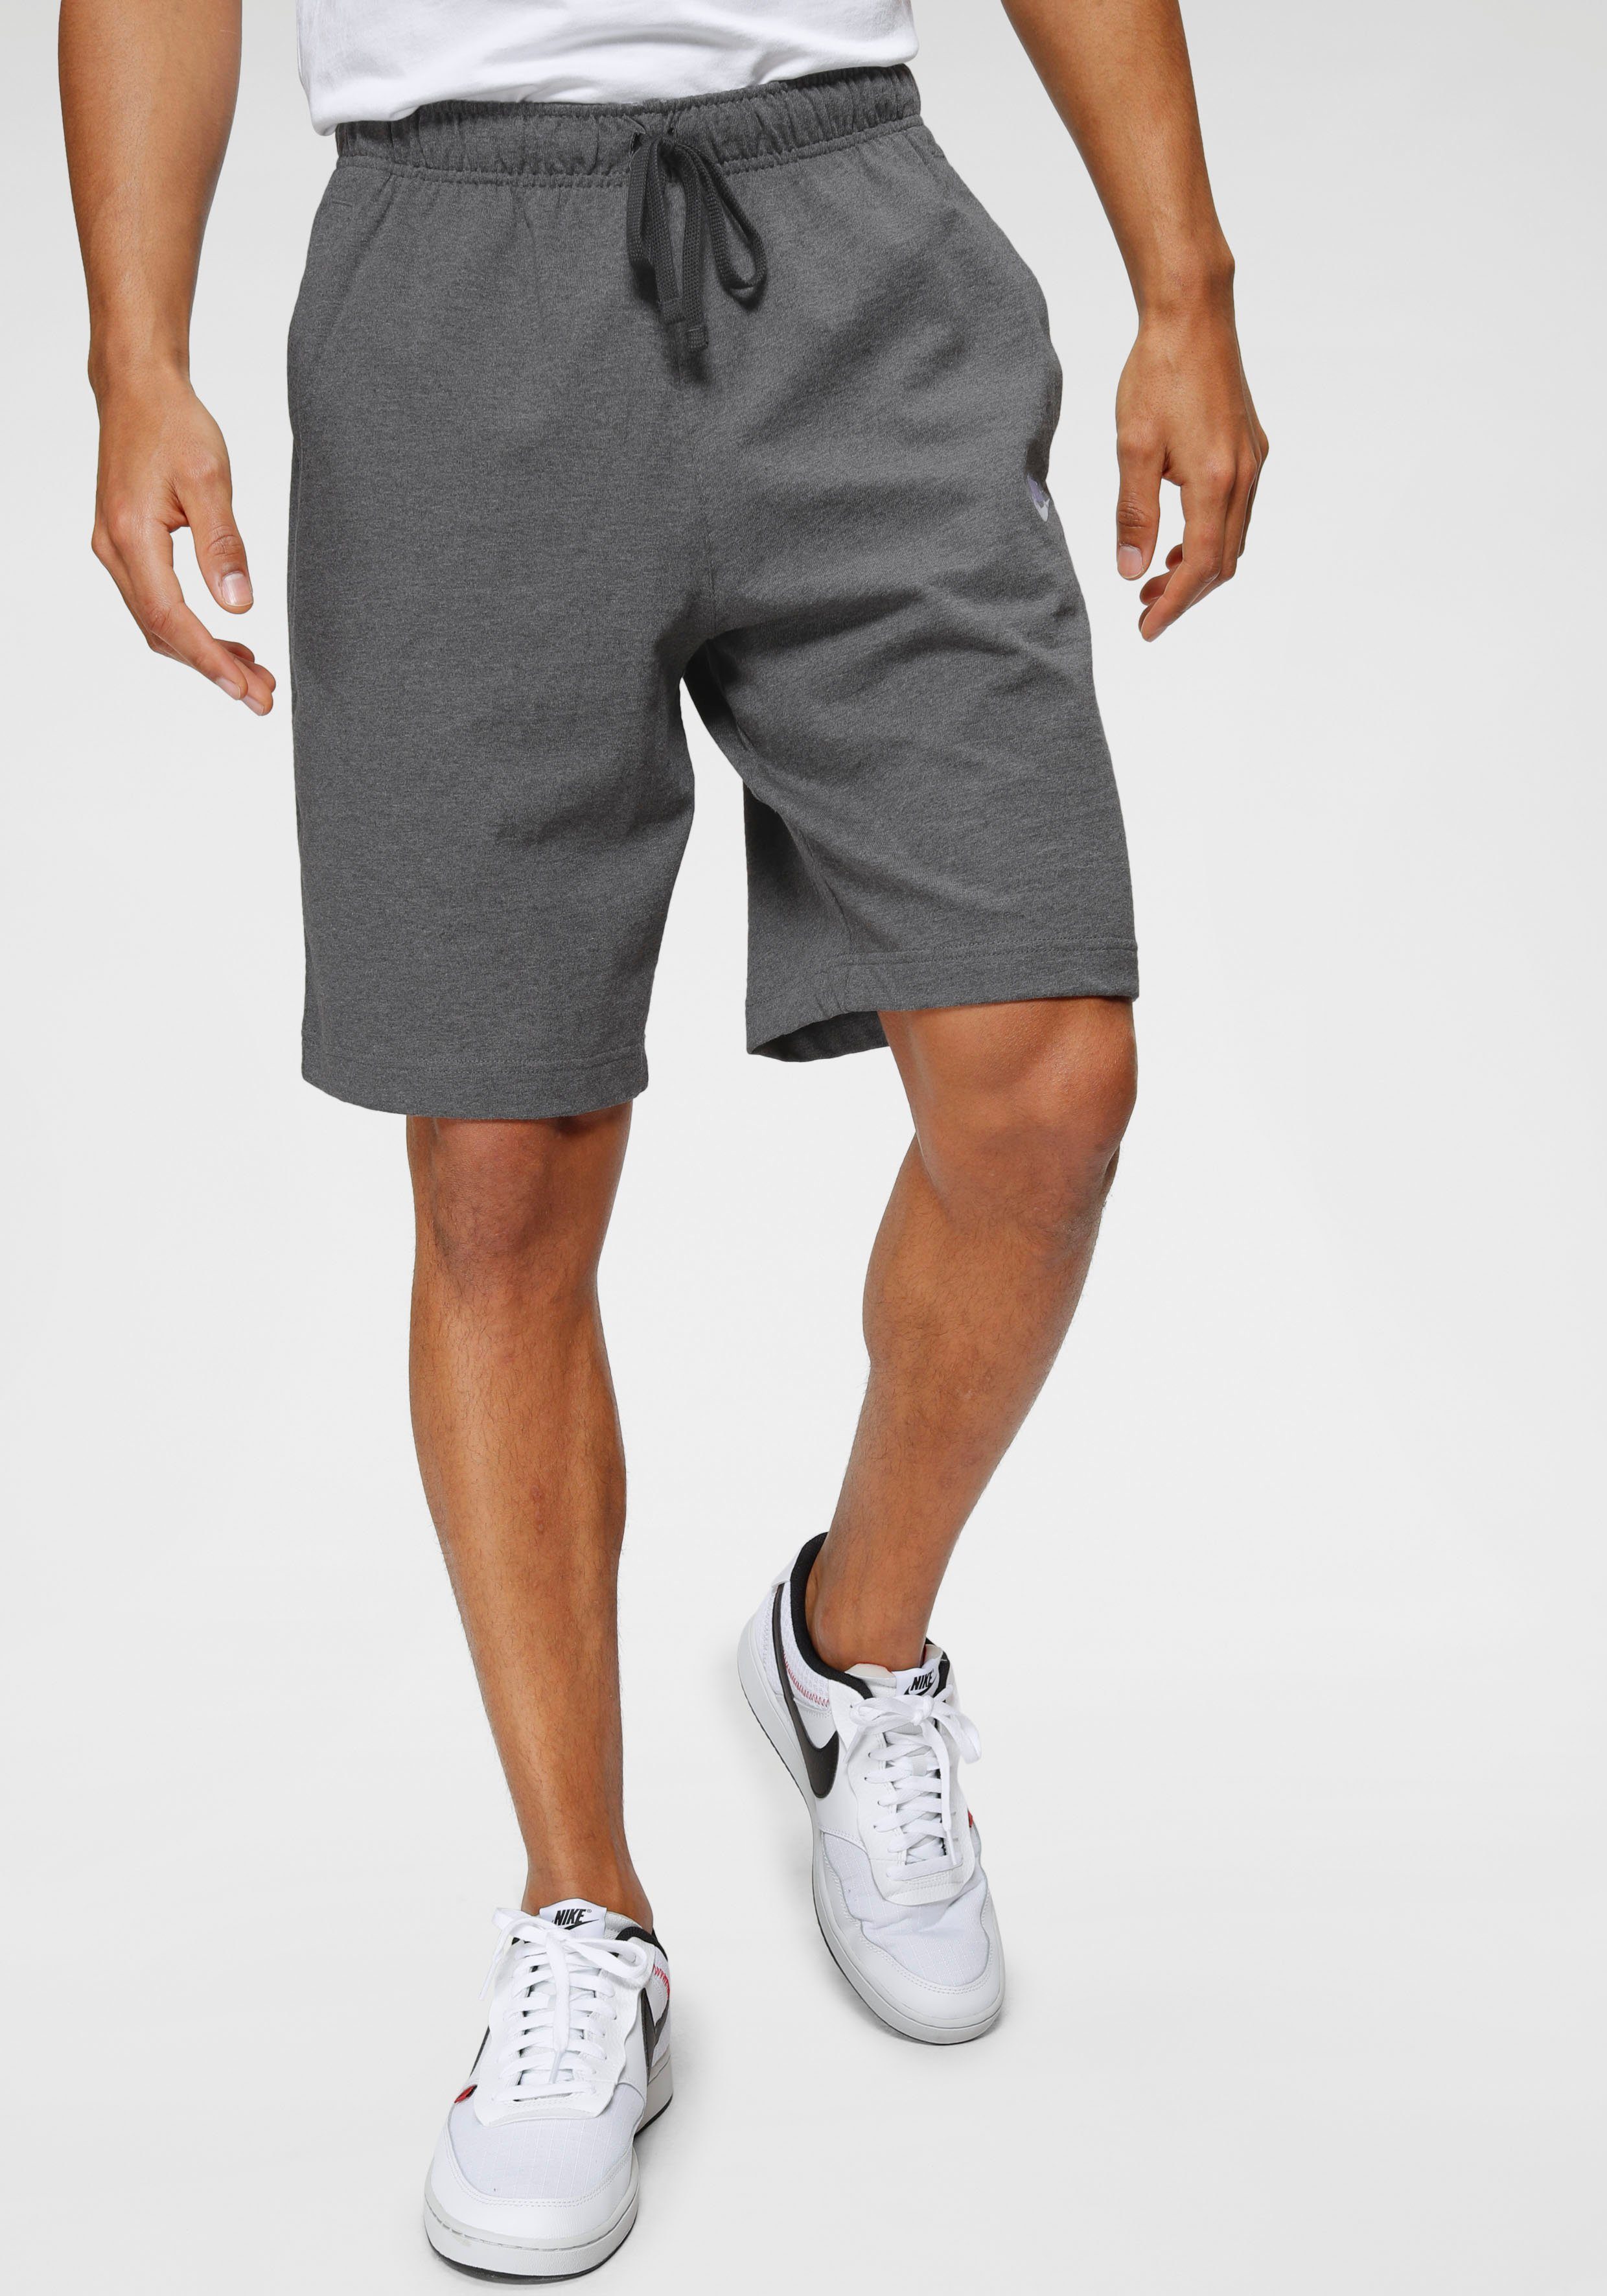 Nike Sportswear Shorts Club Men's Shorts